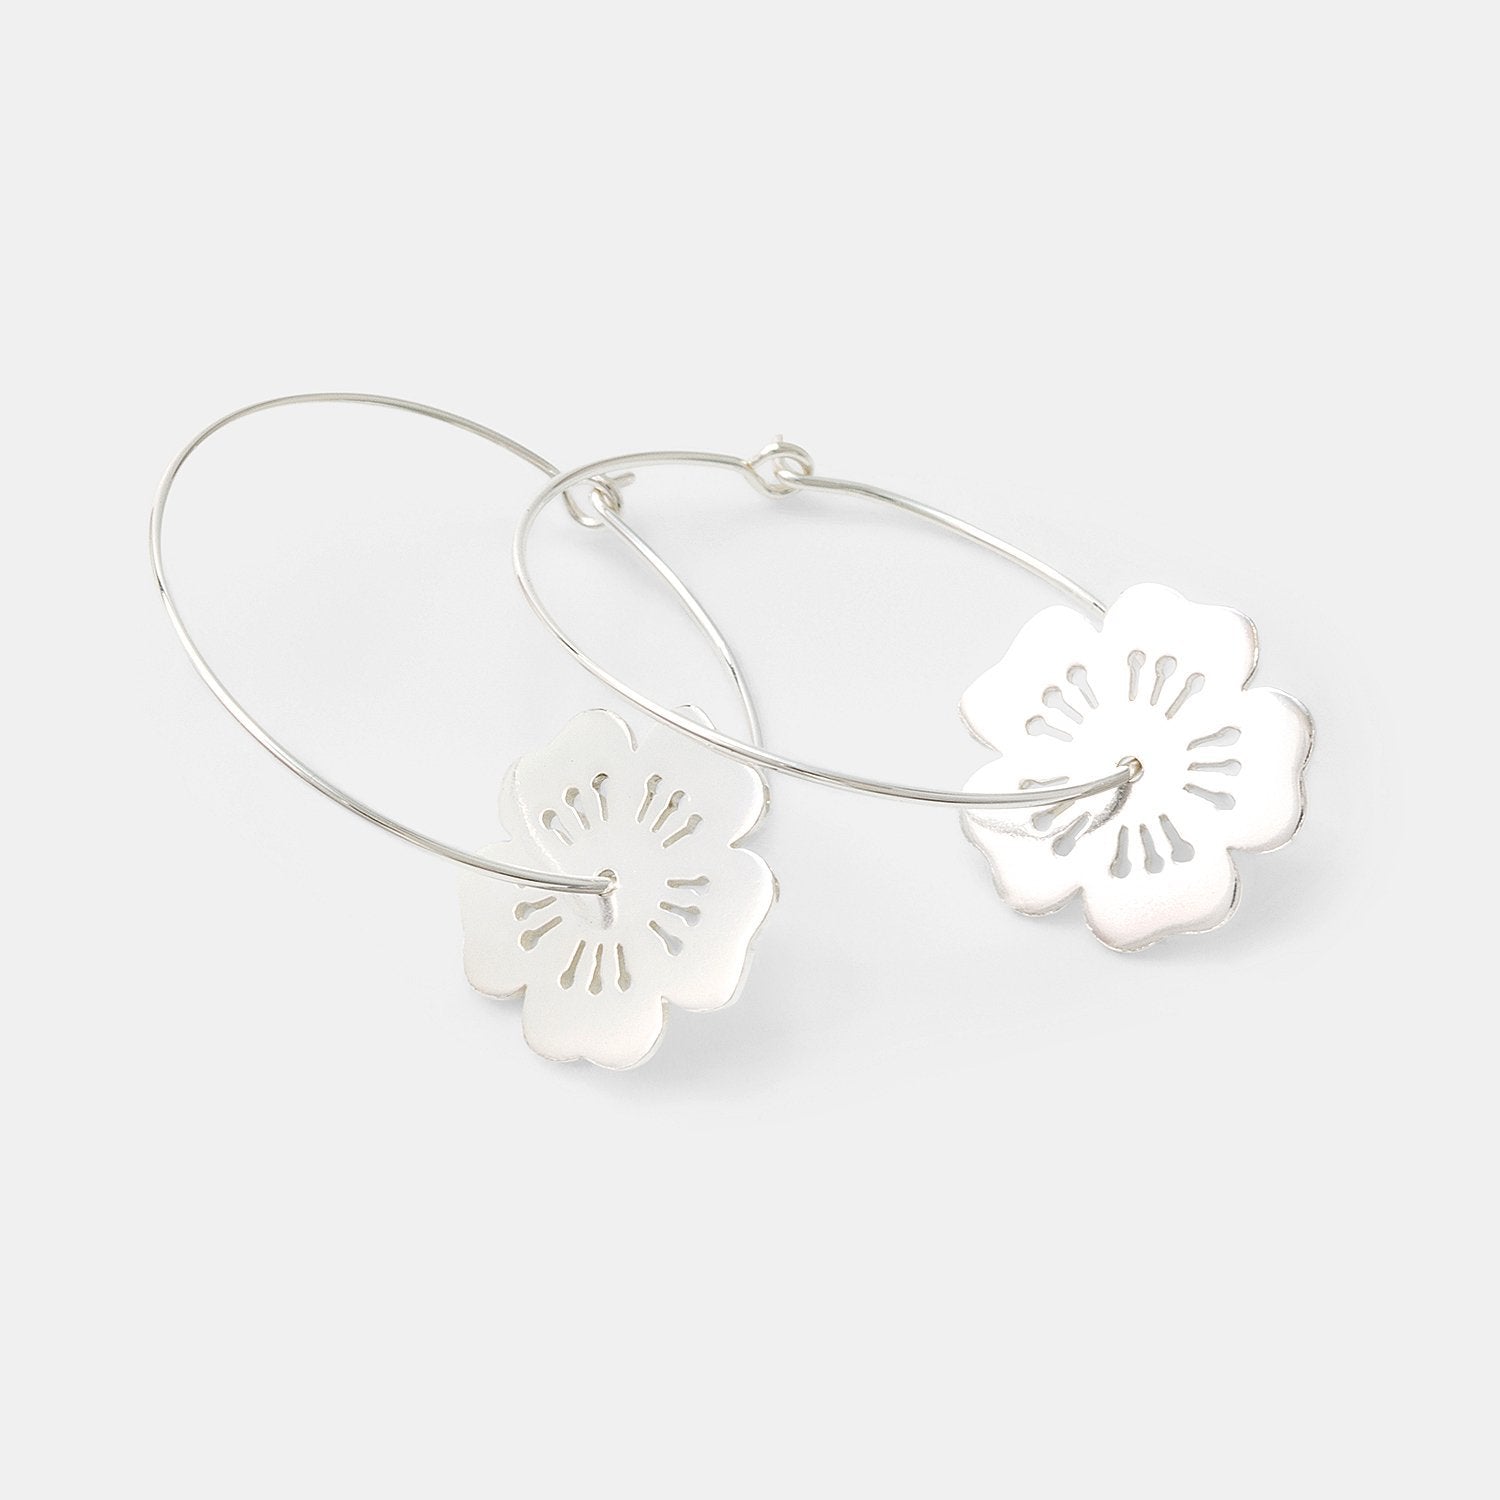 Cherry blossom hoop earrings - Simone Walsh Jewellery Australia